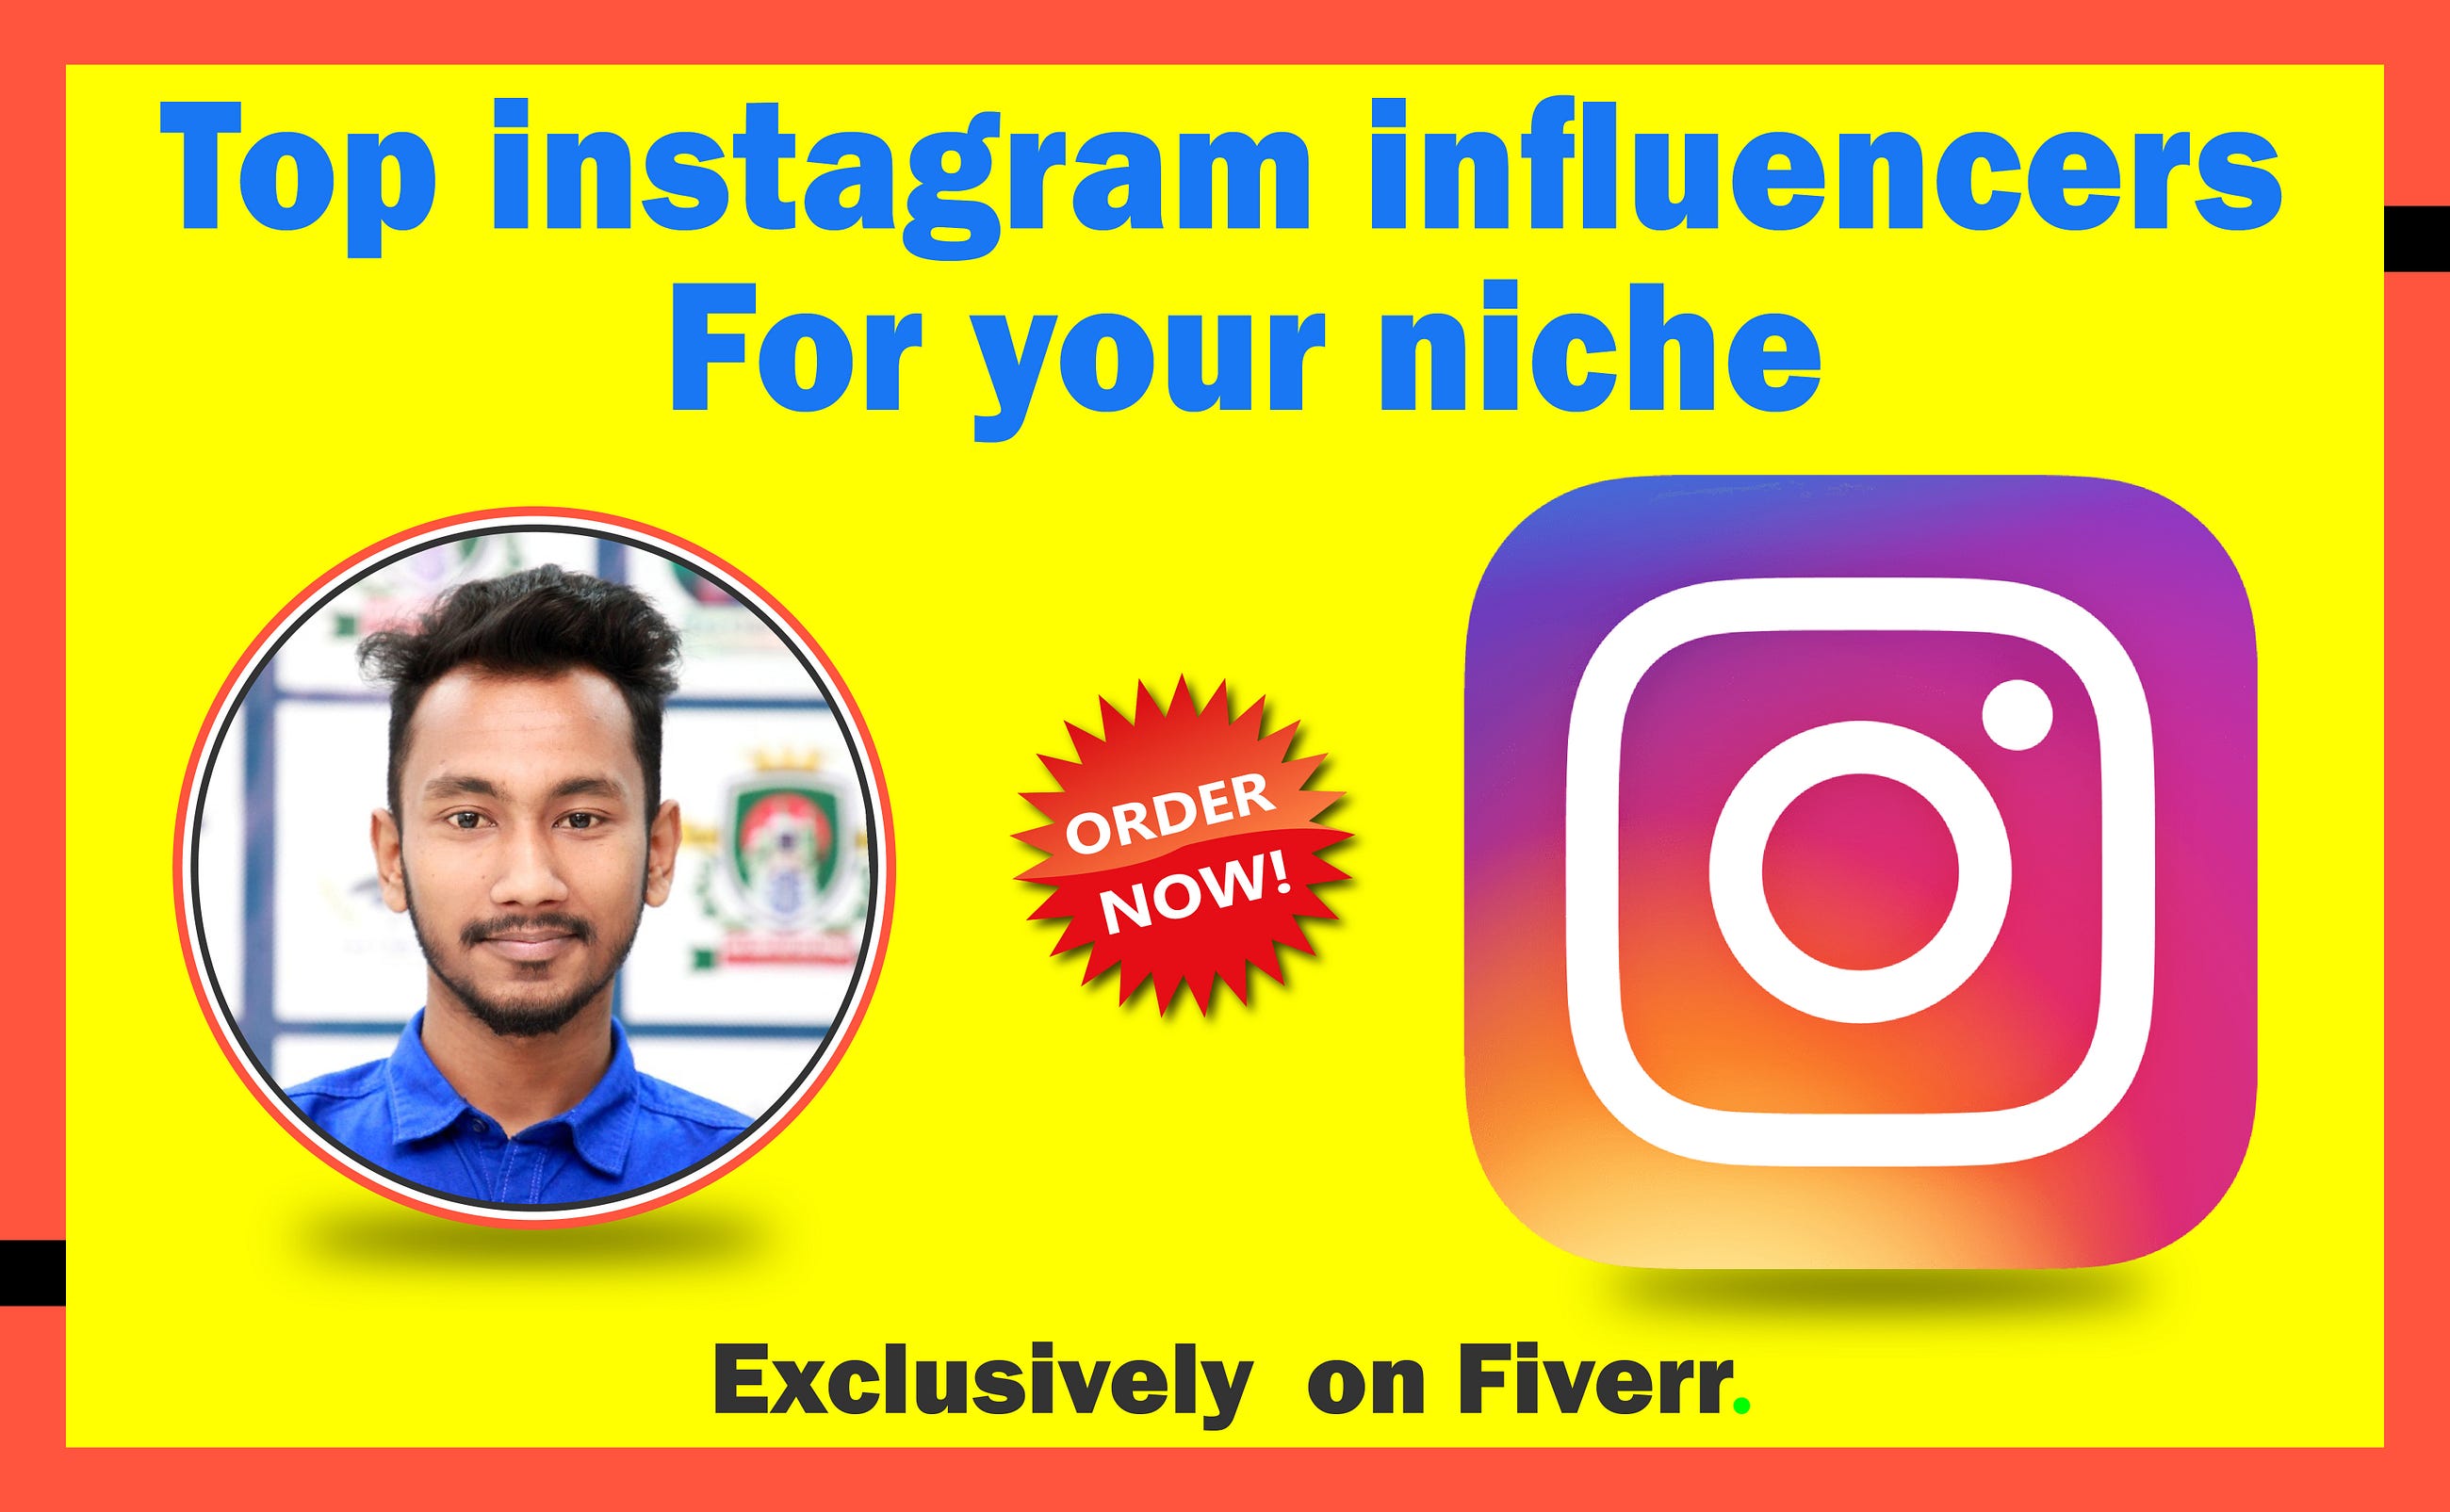 Find Top Best Instagram Influencer for Your Niche